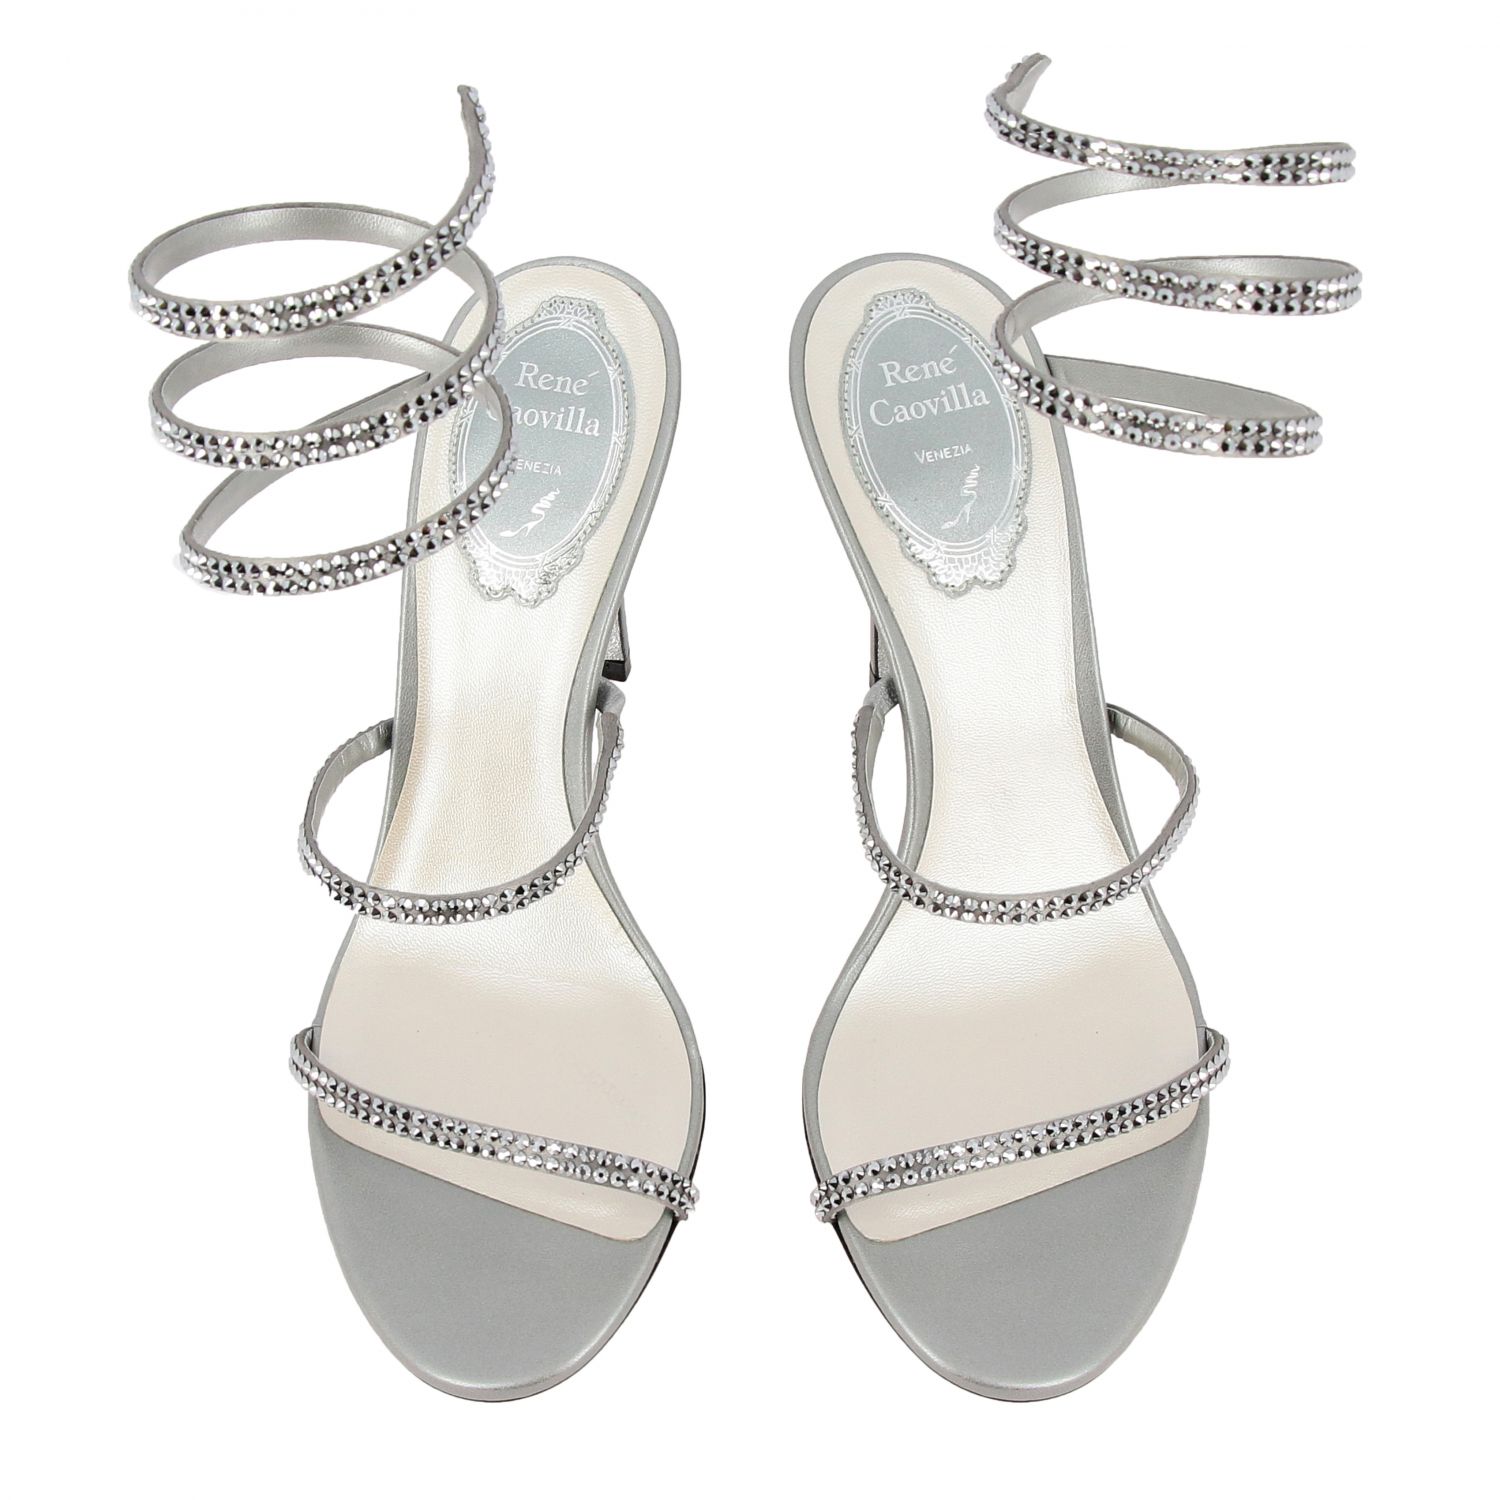 Rene Caovilla Outlet: heeled sandals for women - Silver | Rene Caovilla ...